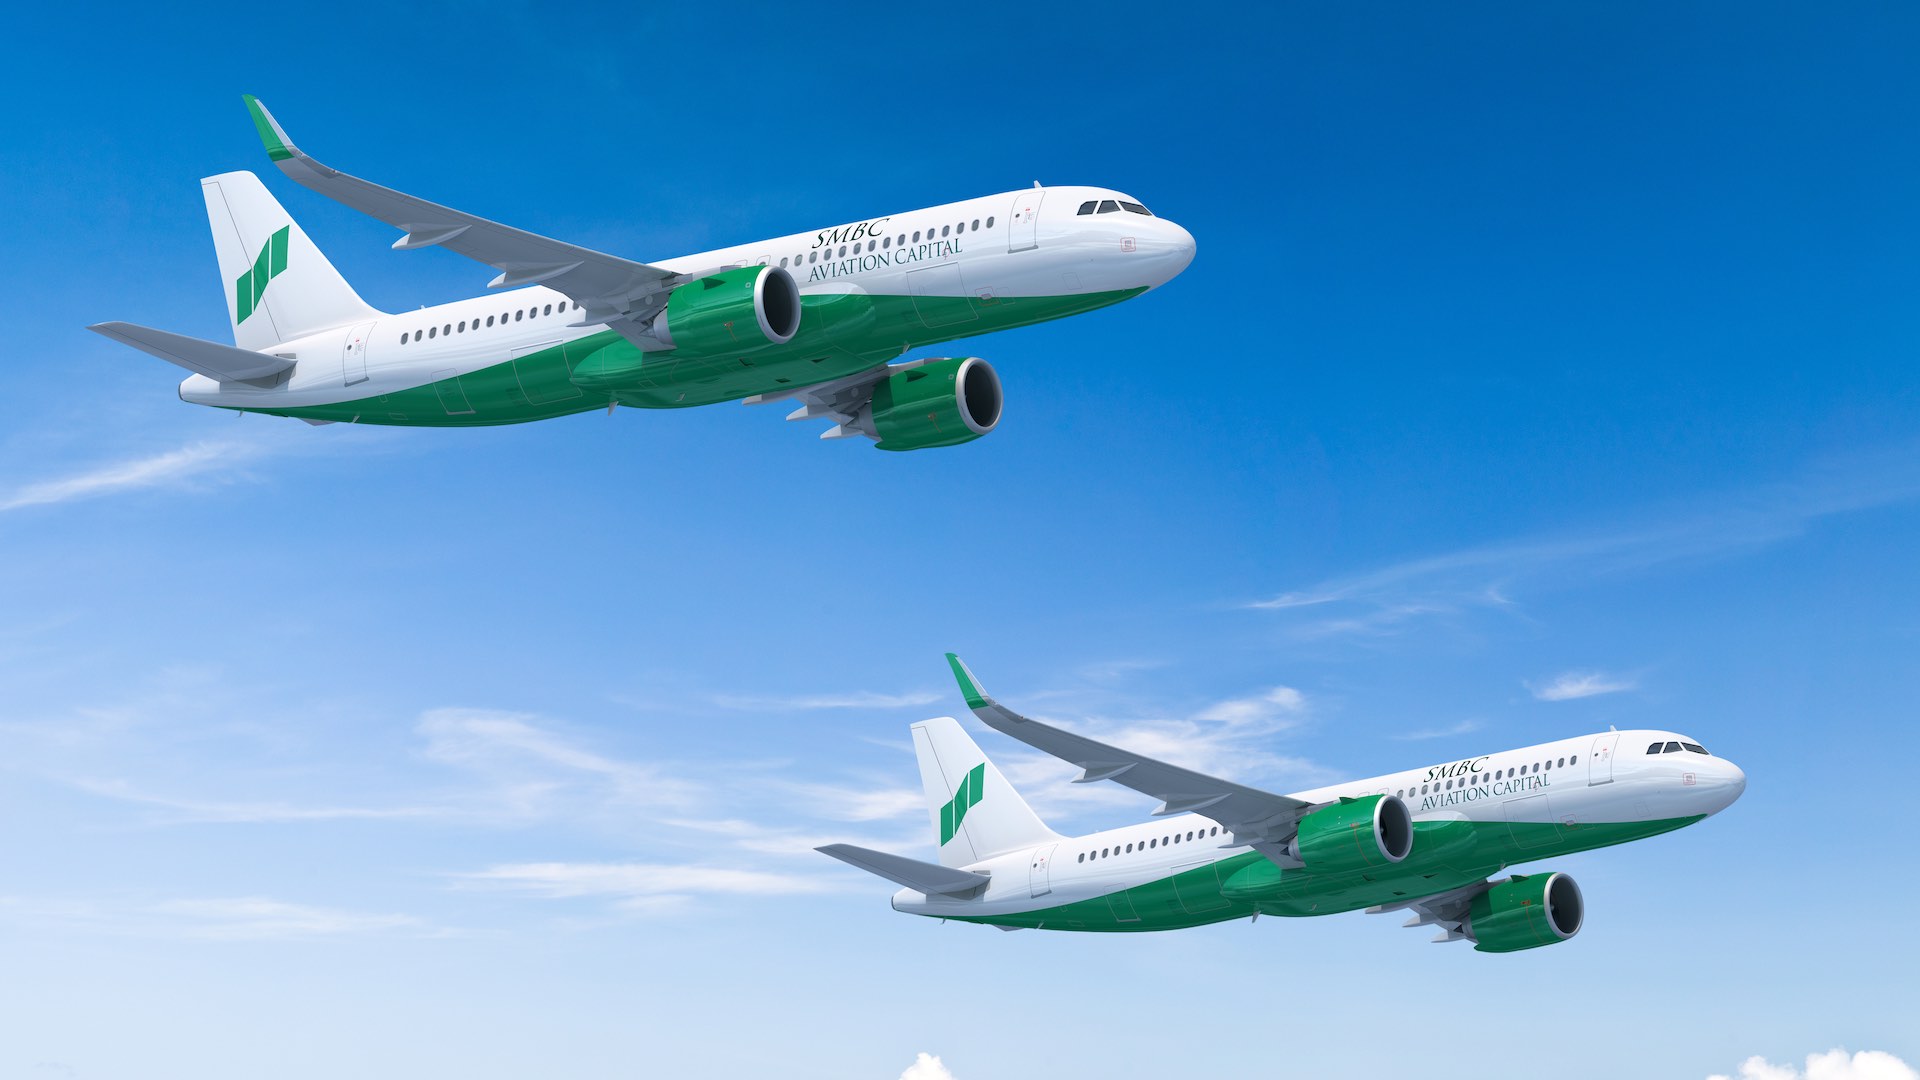 SMBC Aviation Capital 对空客 A320neo 机队大胆投资 34 亿美元